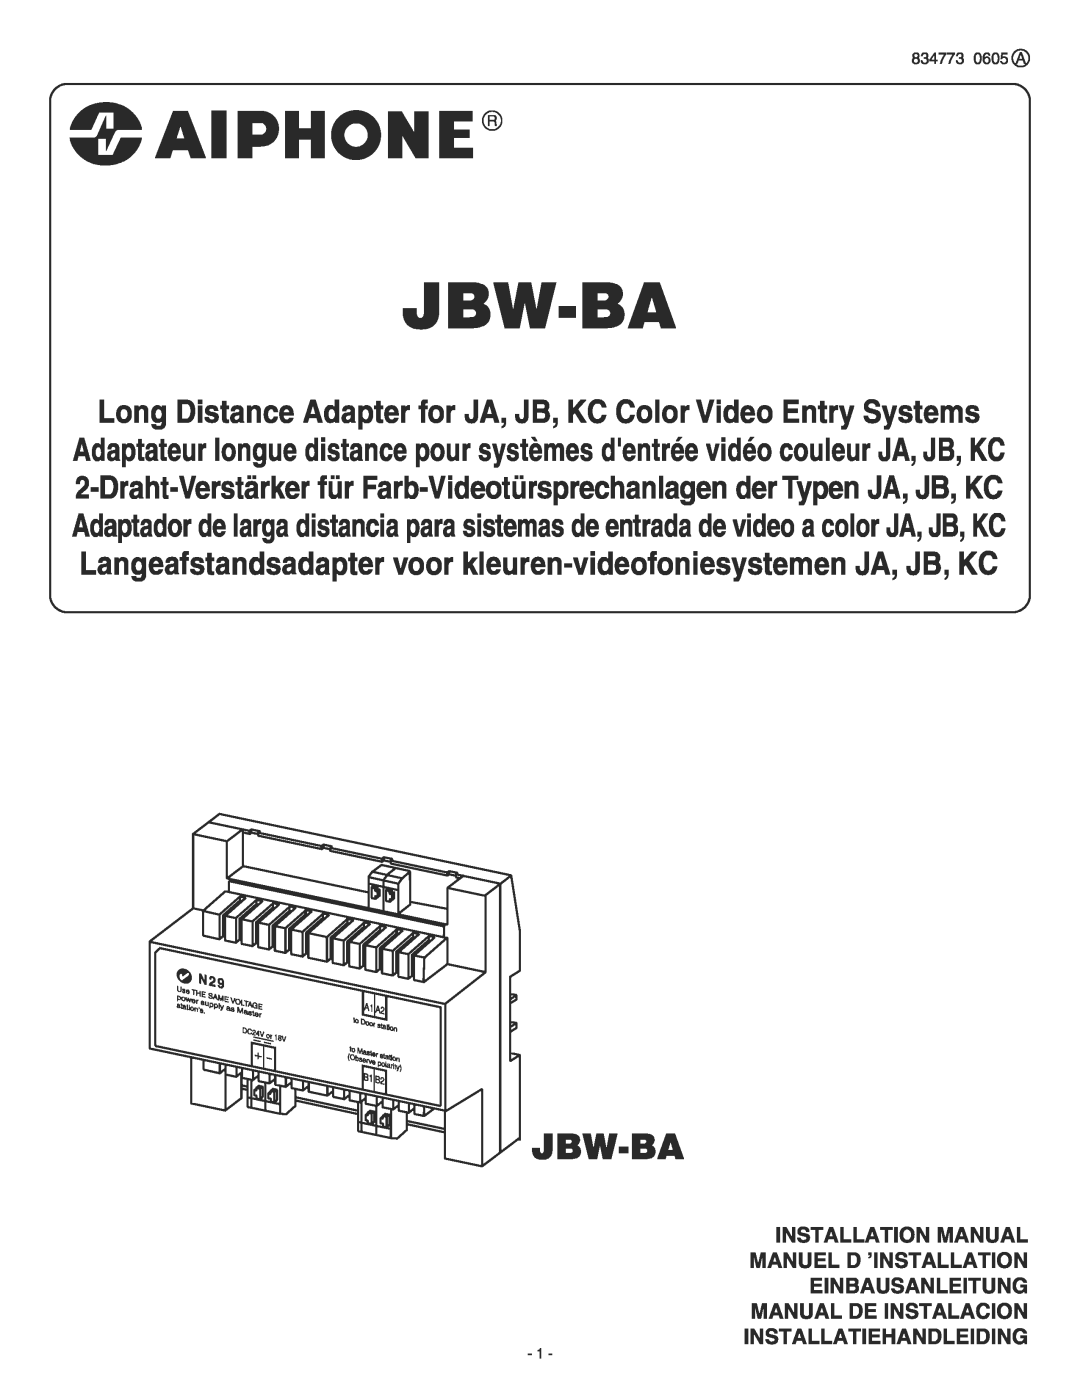 Aiphone JBW-BA installation manual Jbw-Ba 